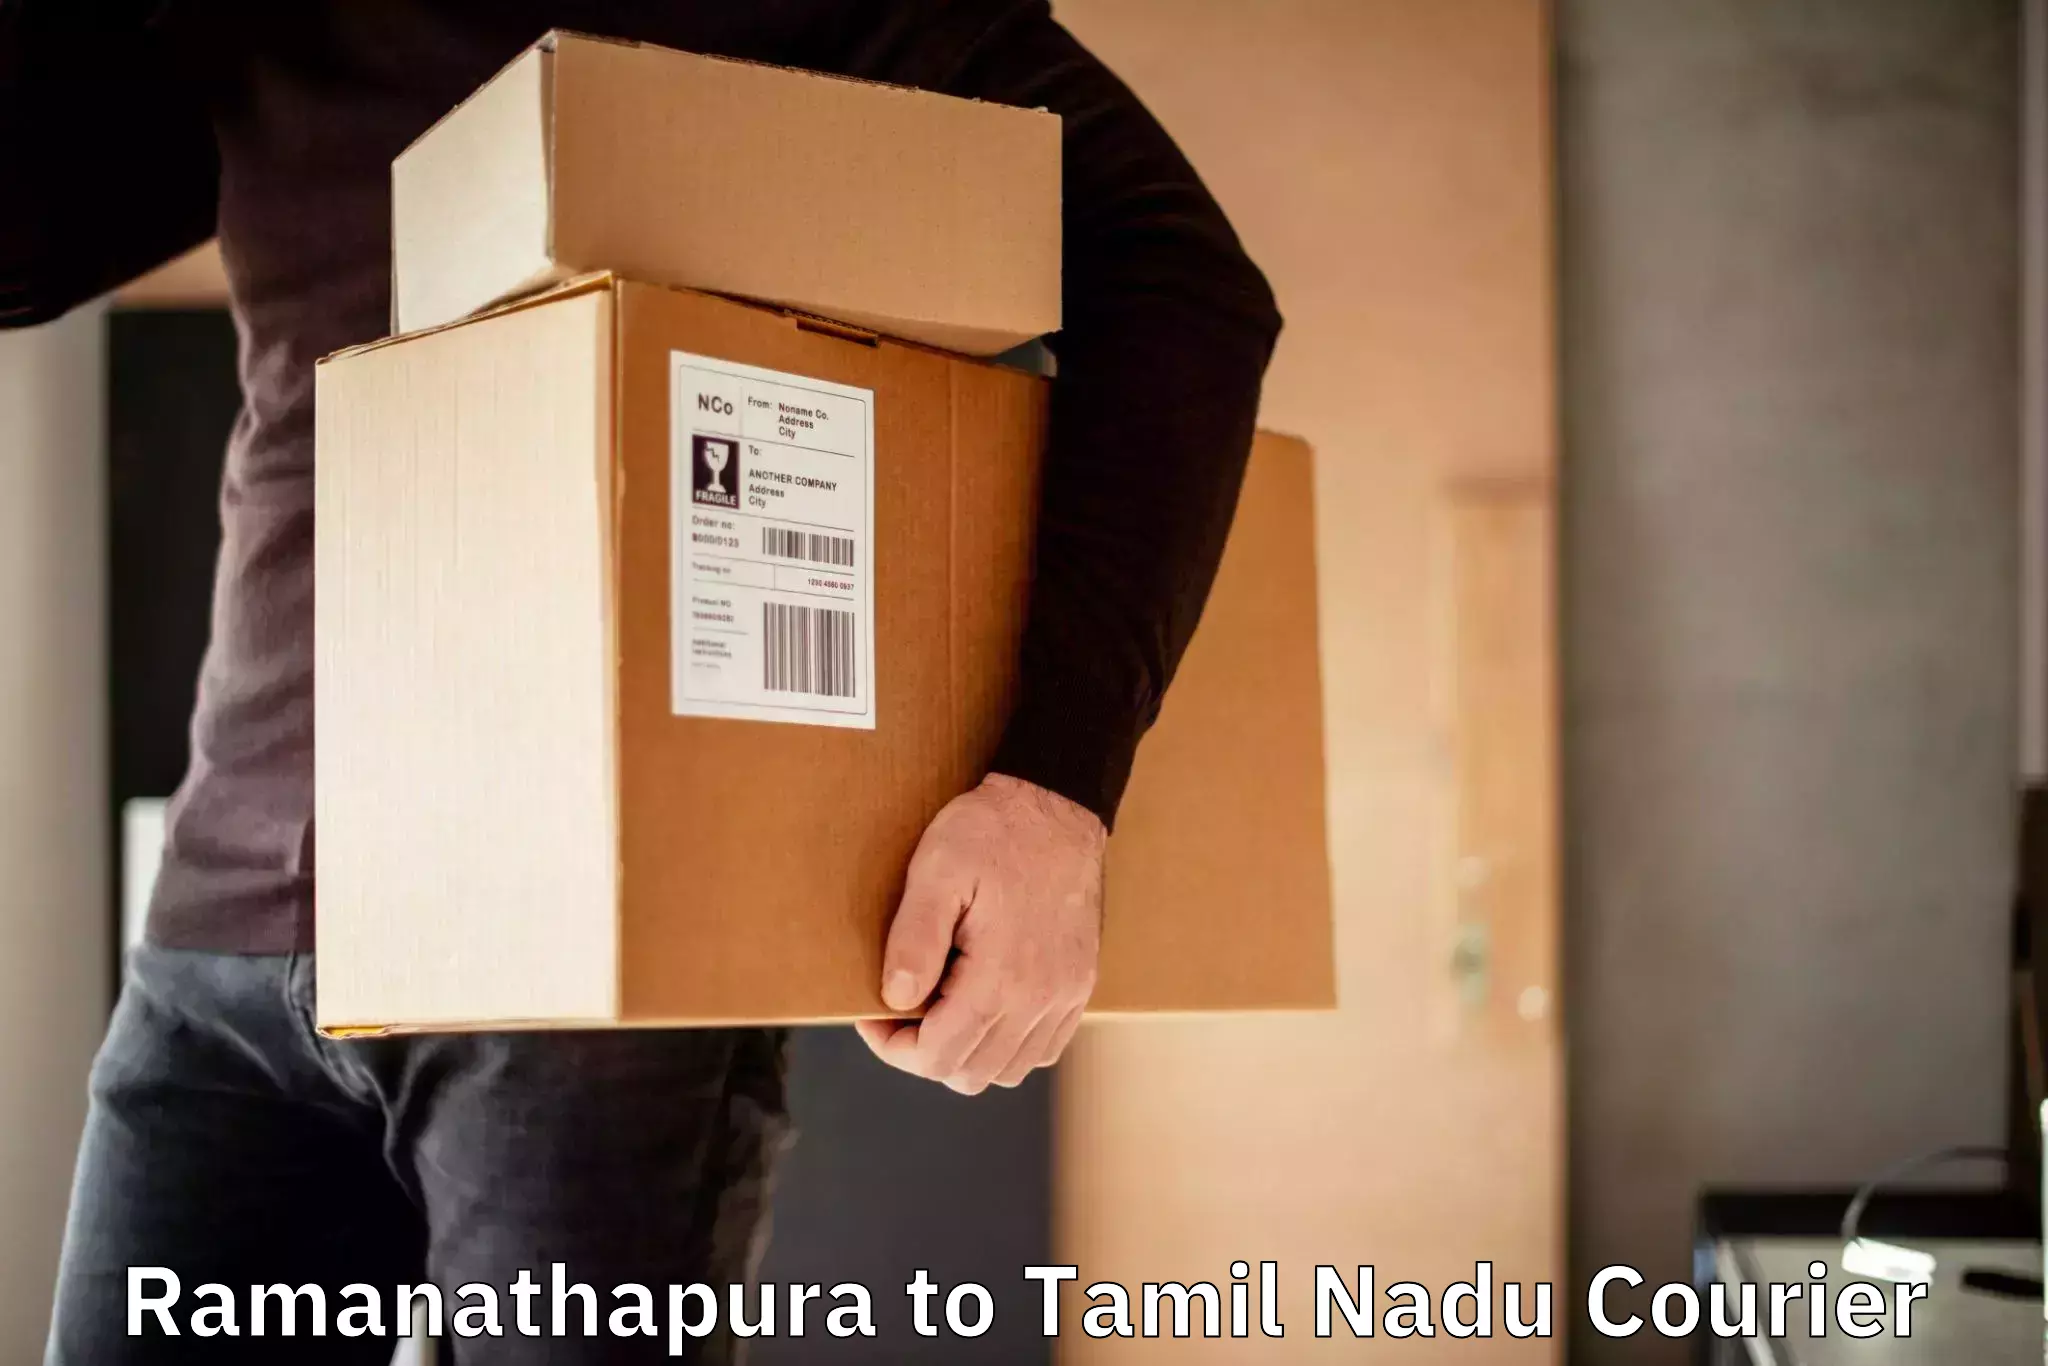 Efficient order fulfillment Ramanathapura to Pennagaram